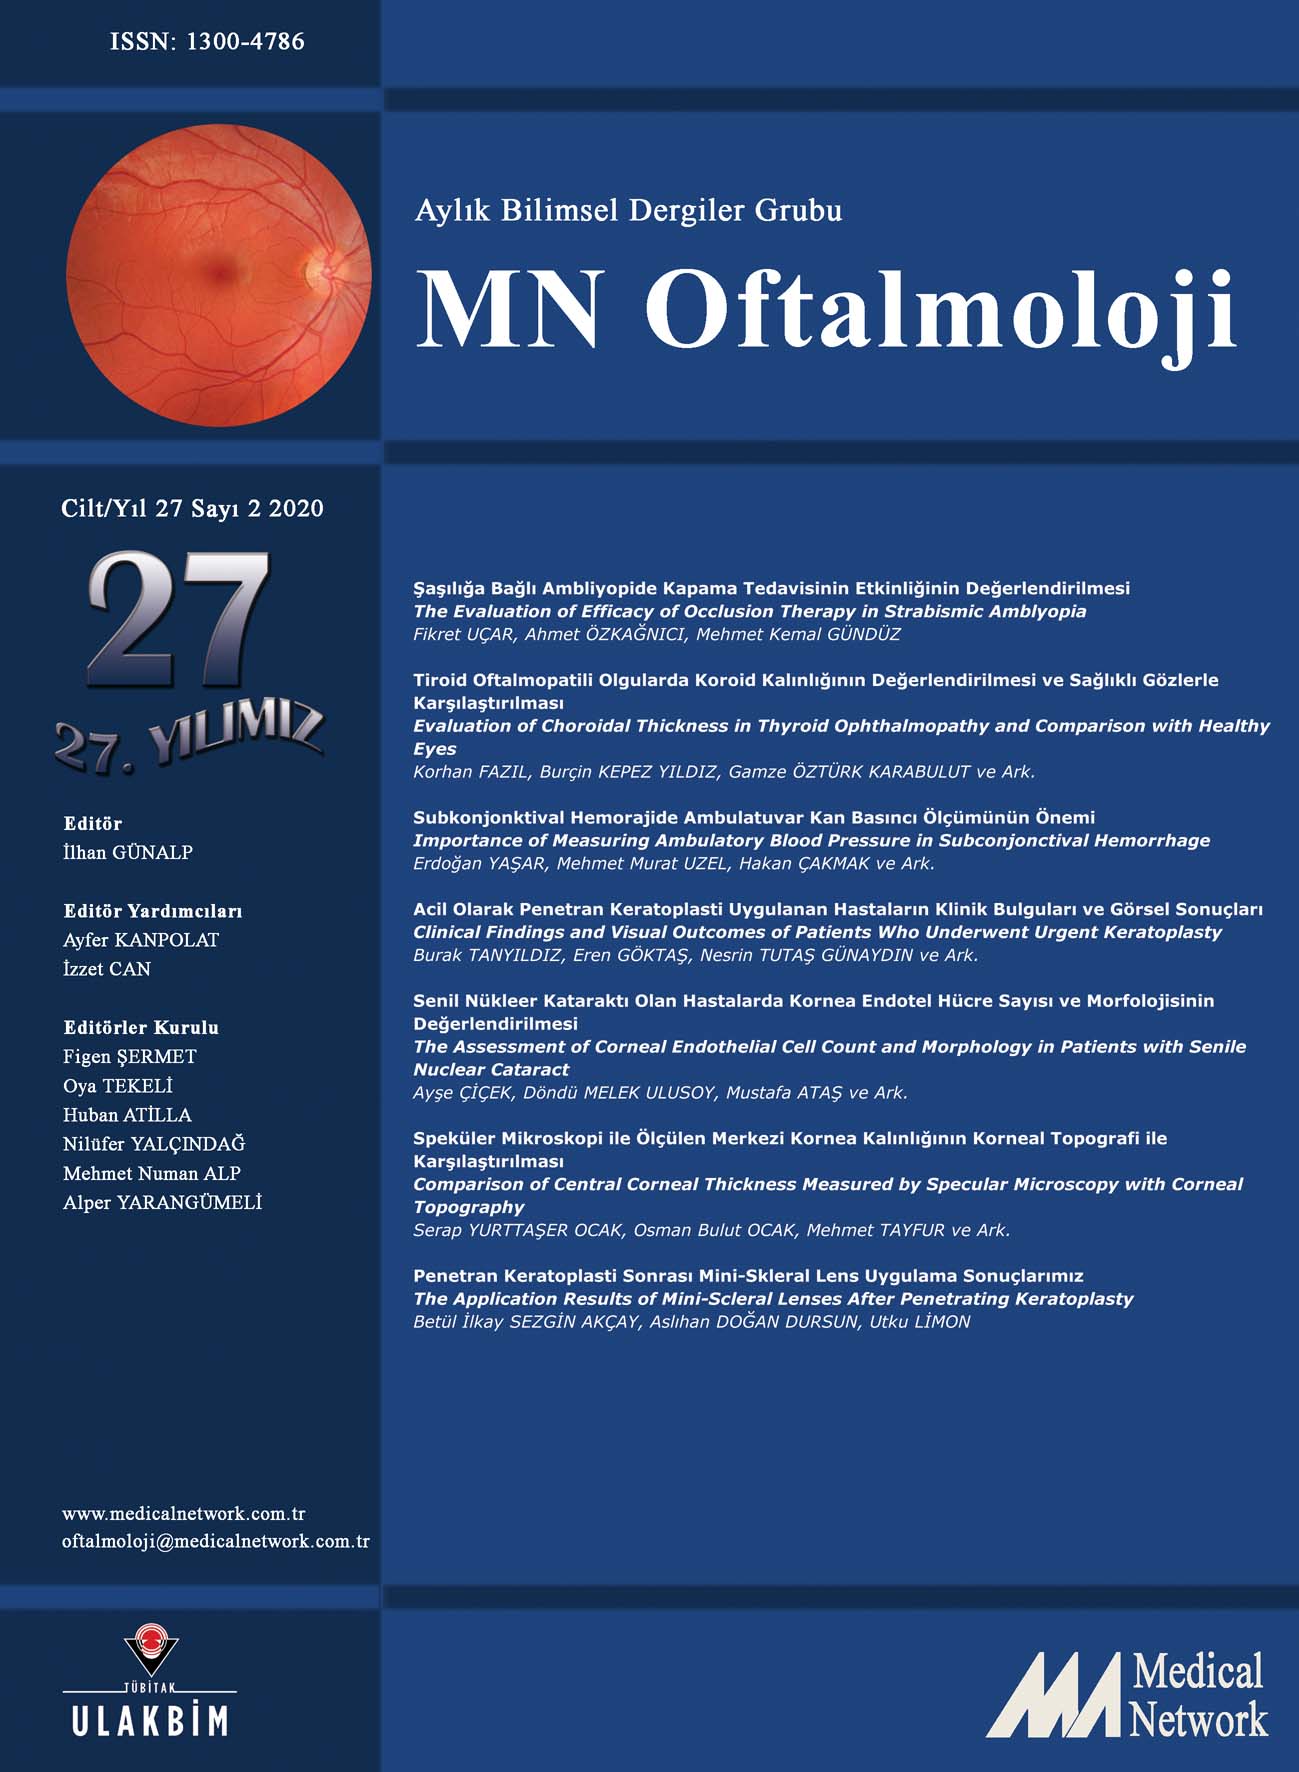 <p>MN Oftalmoloji Cilt: 27 Say: 2 2020 (MN Ophthalmology Volume: 27 No 2 2020)</p>